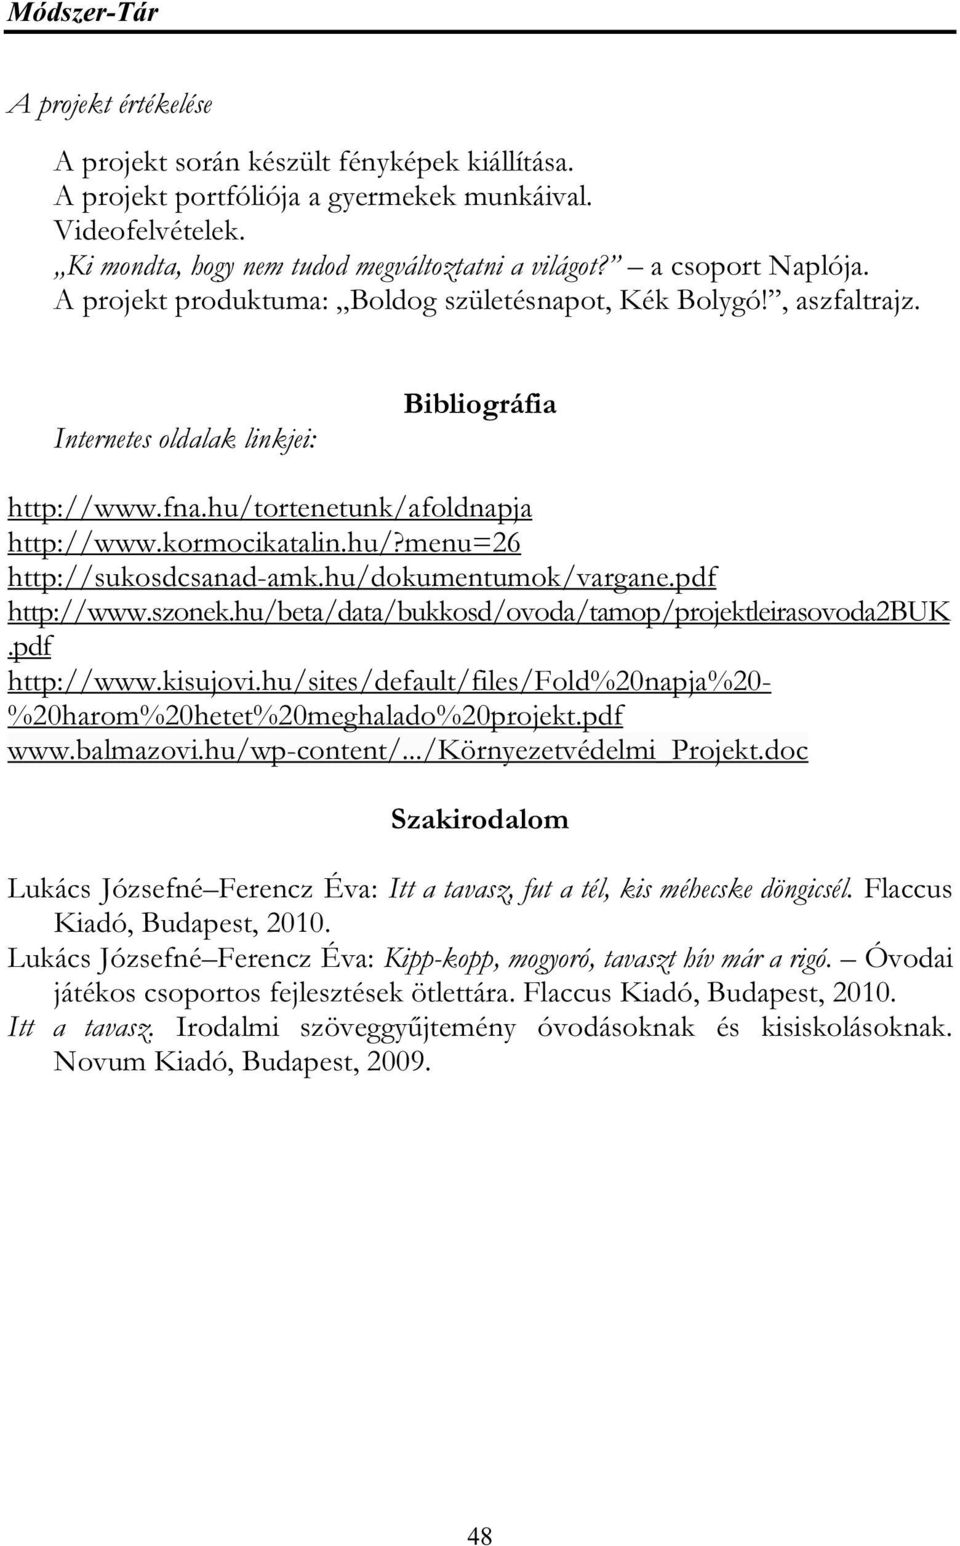 hu/dokumentumok/vargane.pdf http://www.szonek.hu/beta/data/bukkosd/ovoda/tamop/projektleirasovoda2buk.pdf http://www.kisujovi.